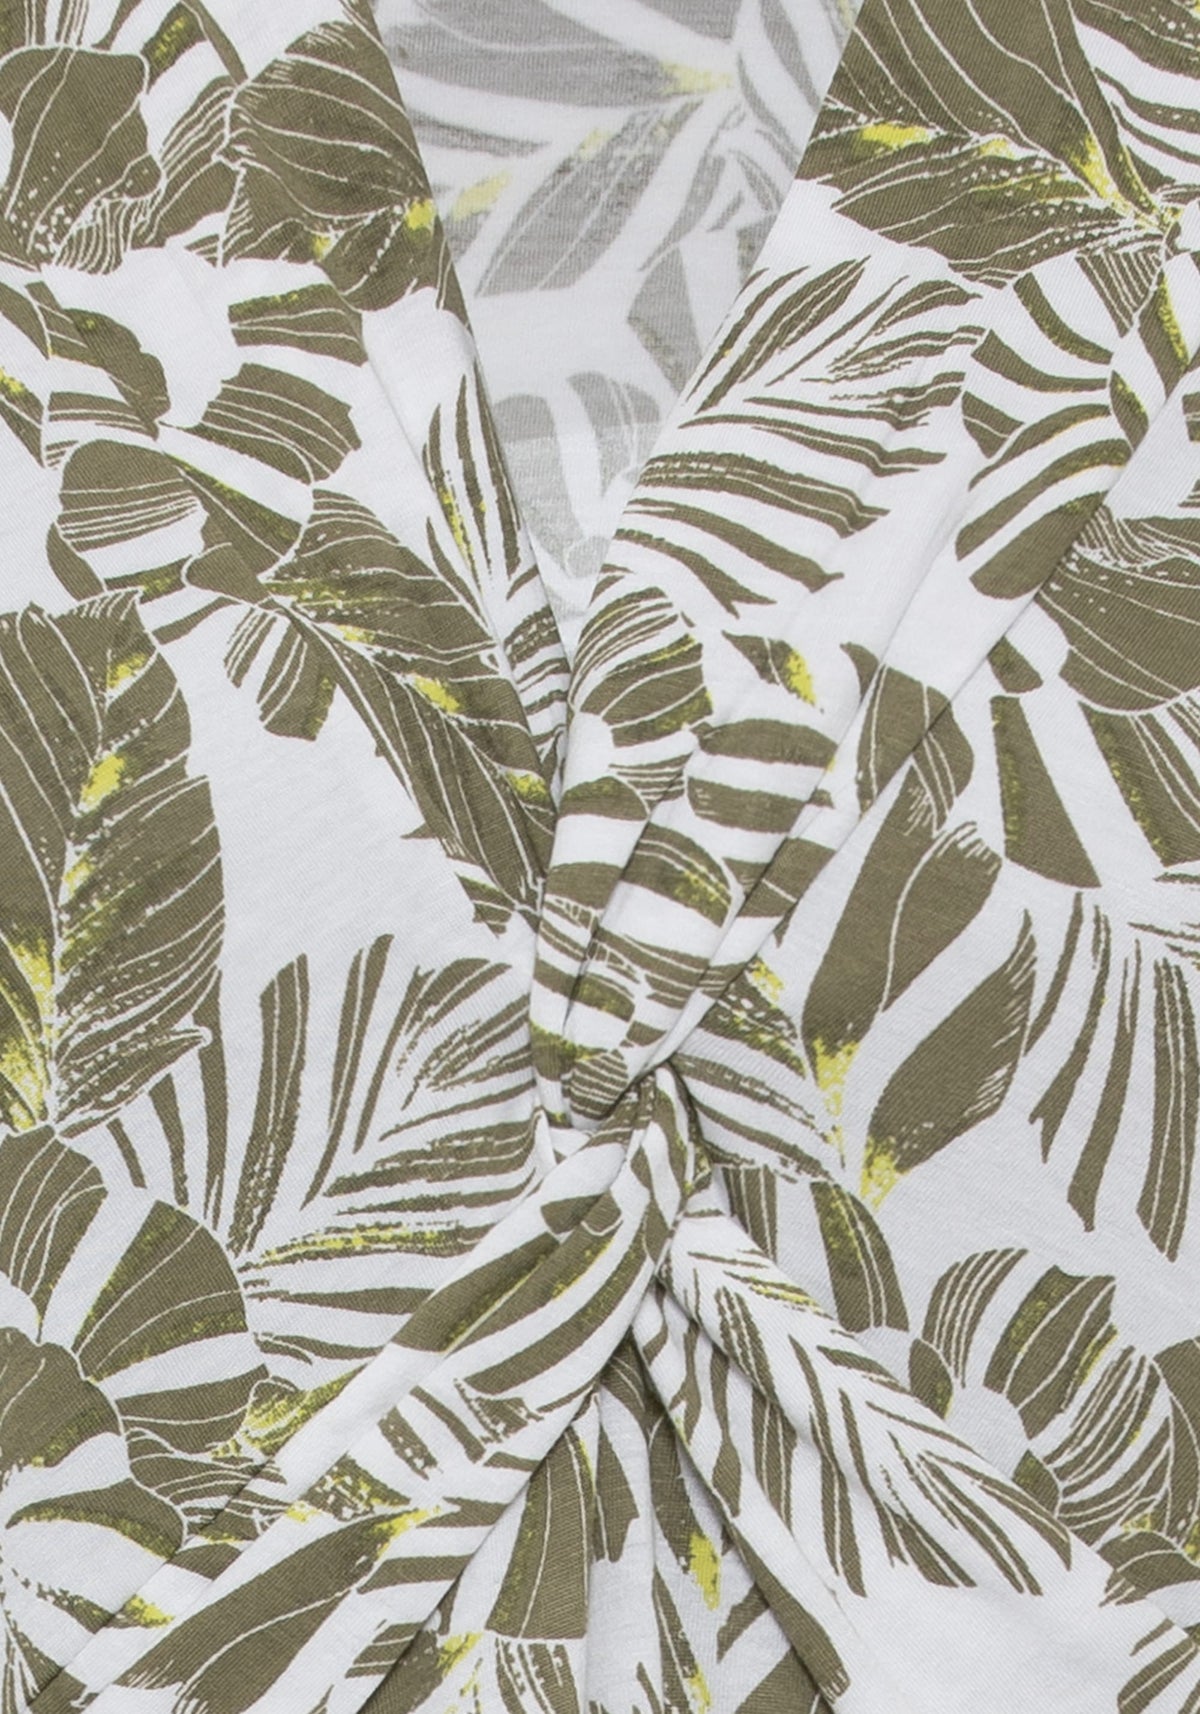 Cotton Blend Palm Print Midi Dress containing TENCEL™ Modal